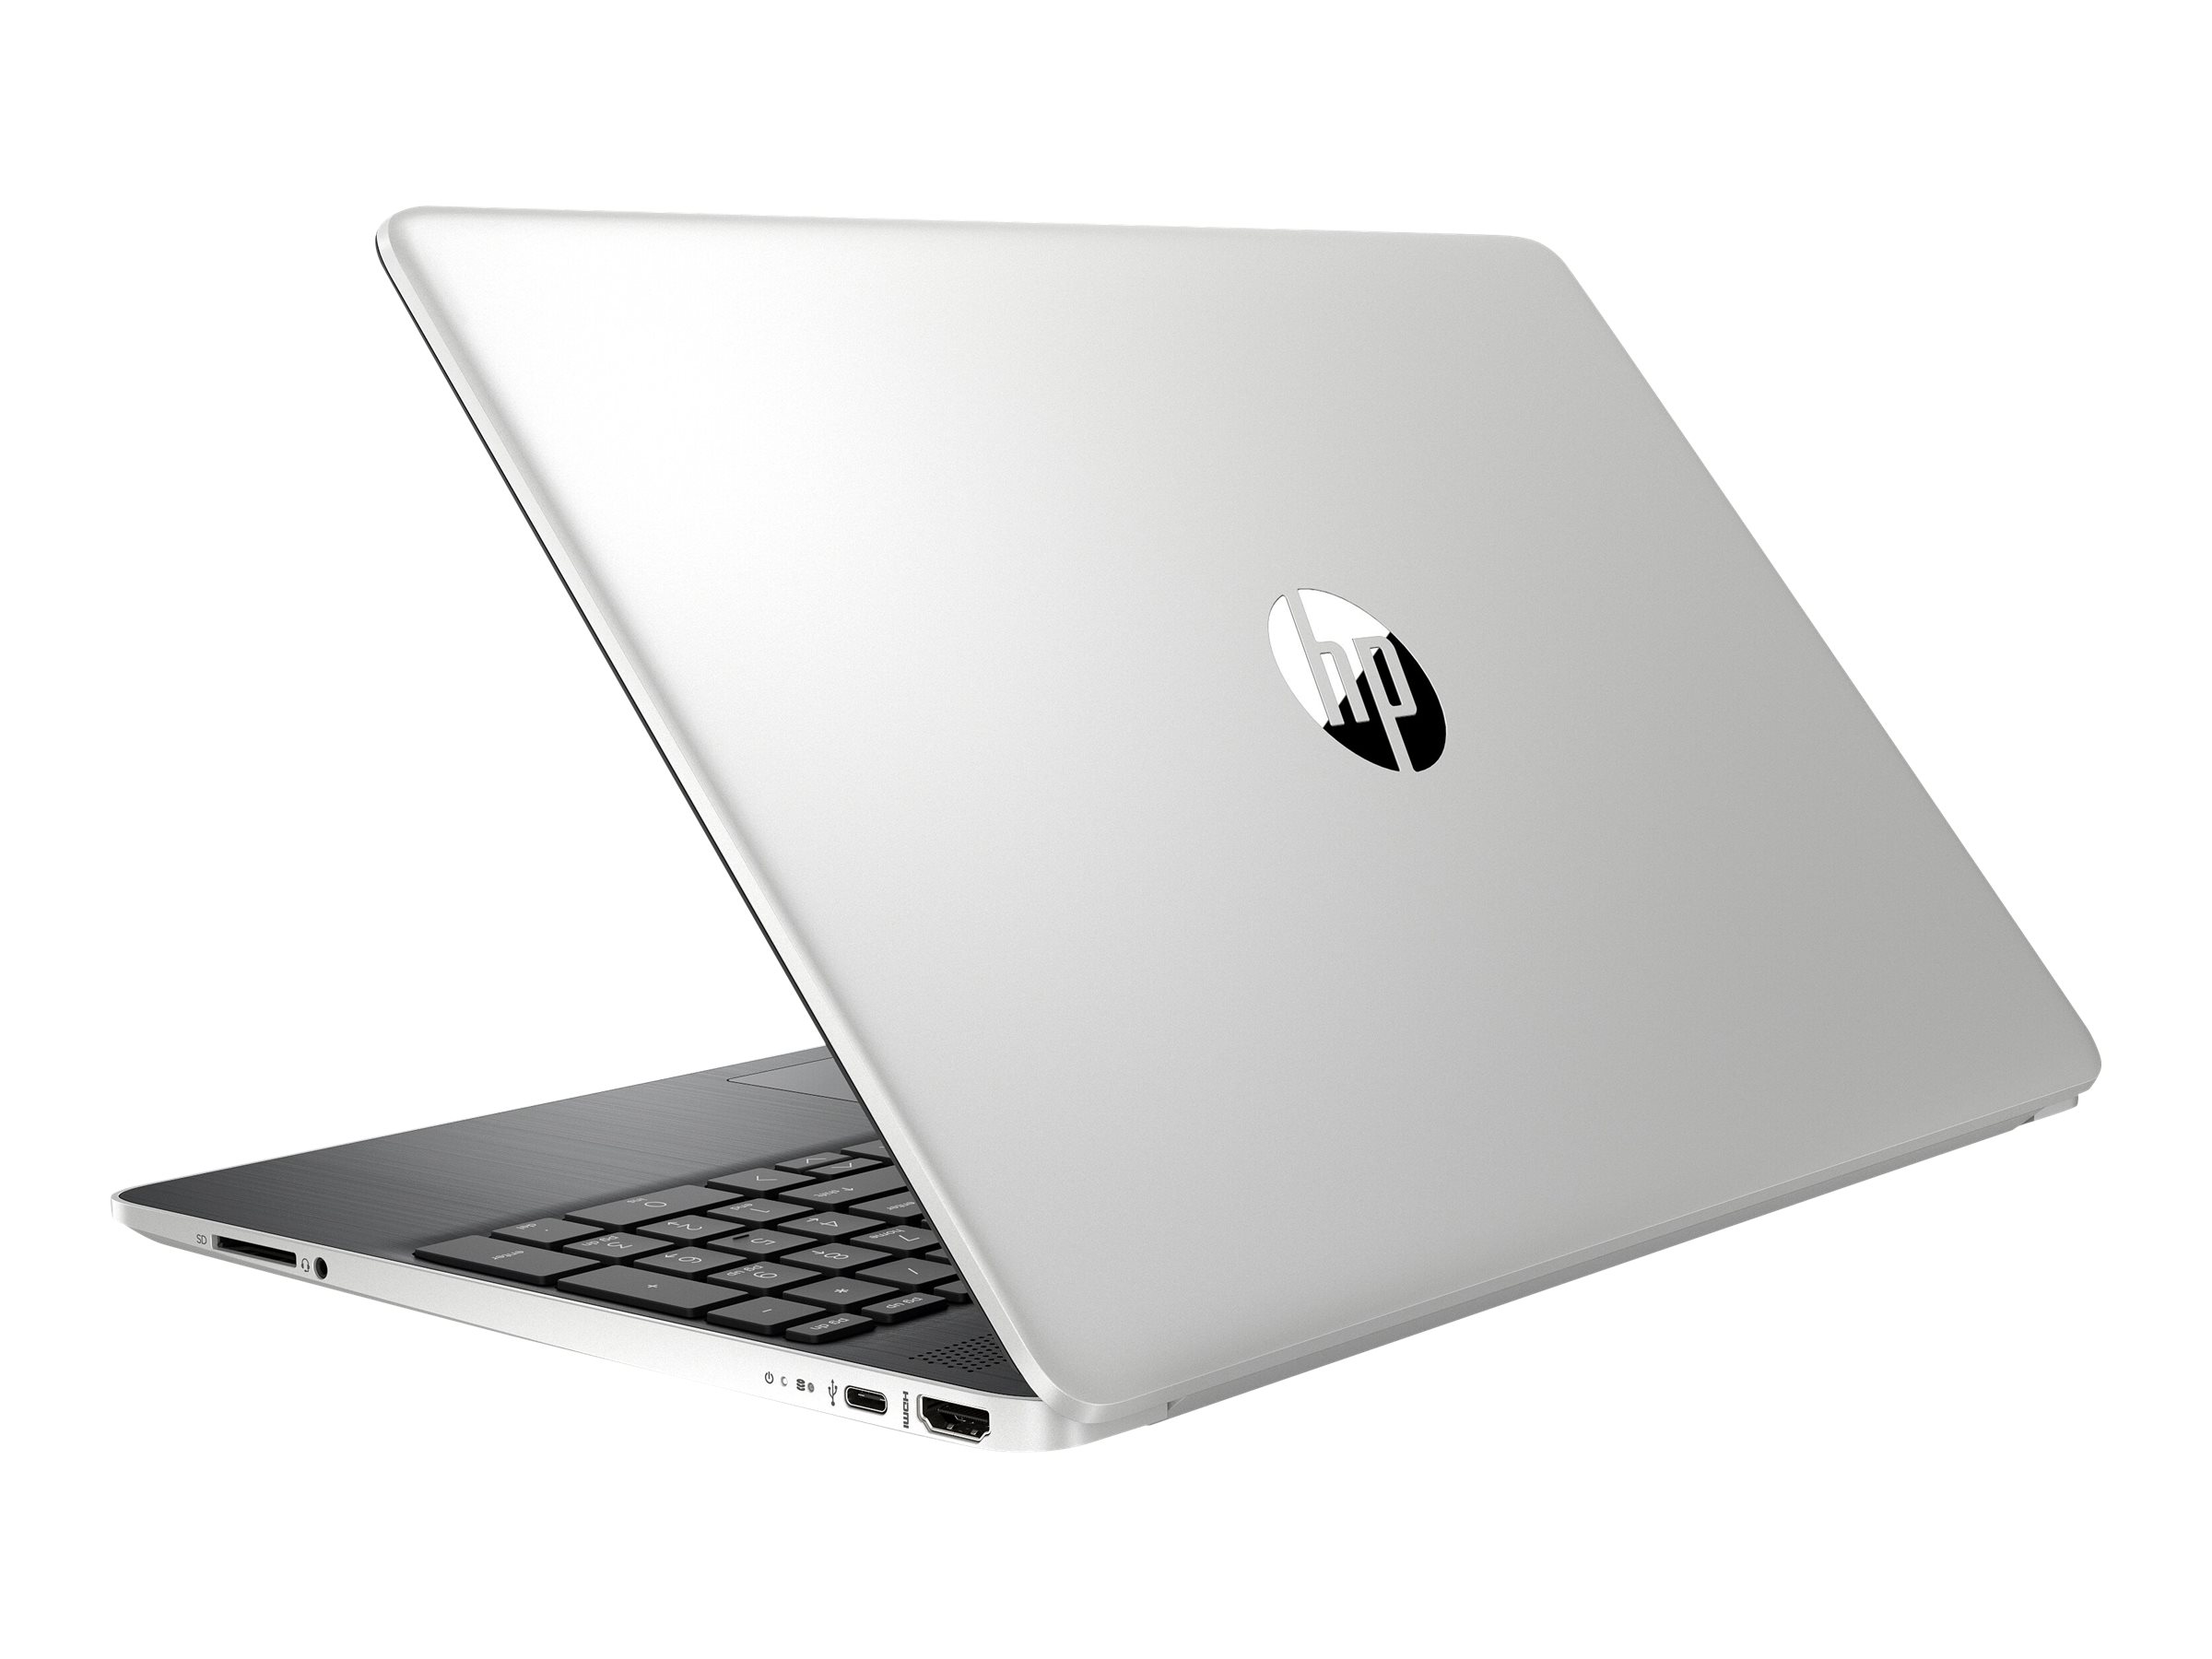 HP 15.6" Full HD Laptop, Intel Core i7-1065G7 Processor, 8GB Memory, 256GB SSD, - image 3 of 6